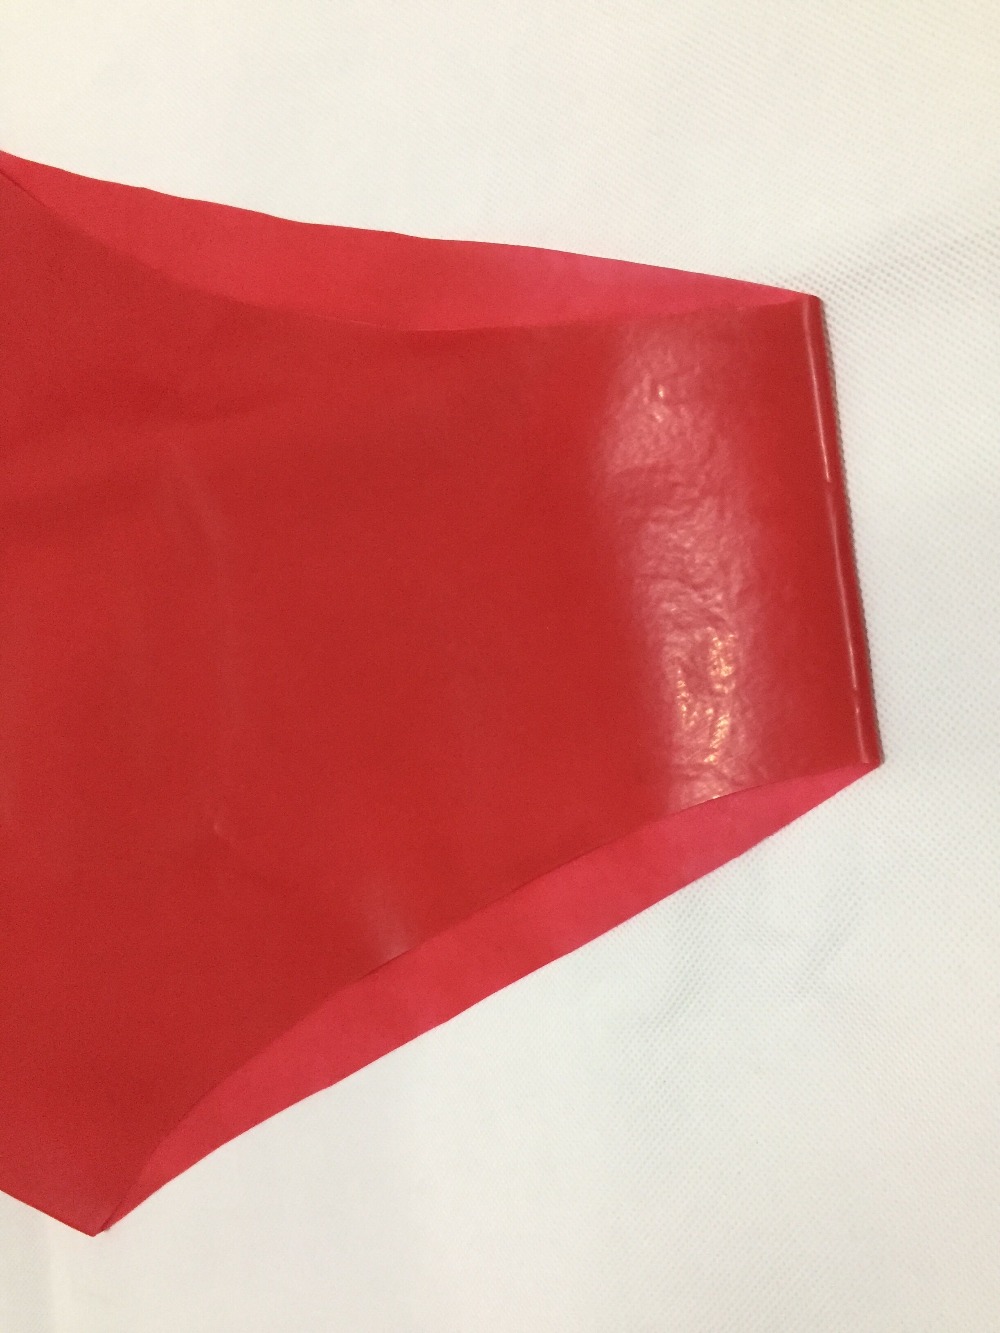 100% Latex Rubber Gummi Leotard Mould Body Swimsuit Red Latex Bodysuit